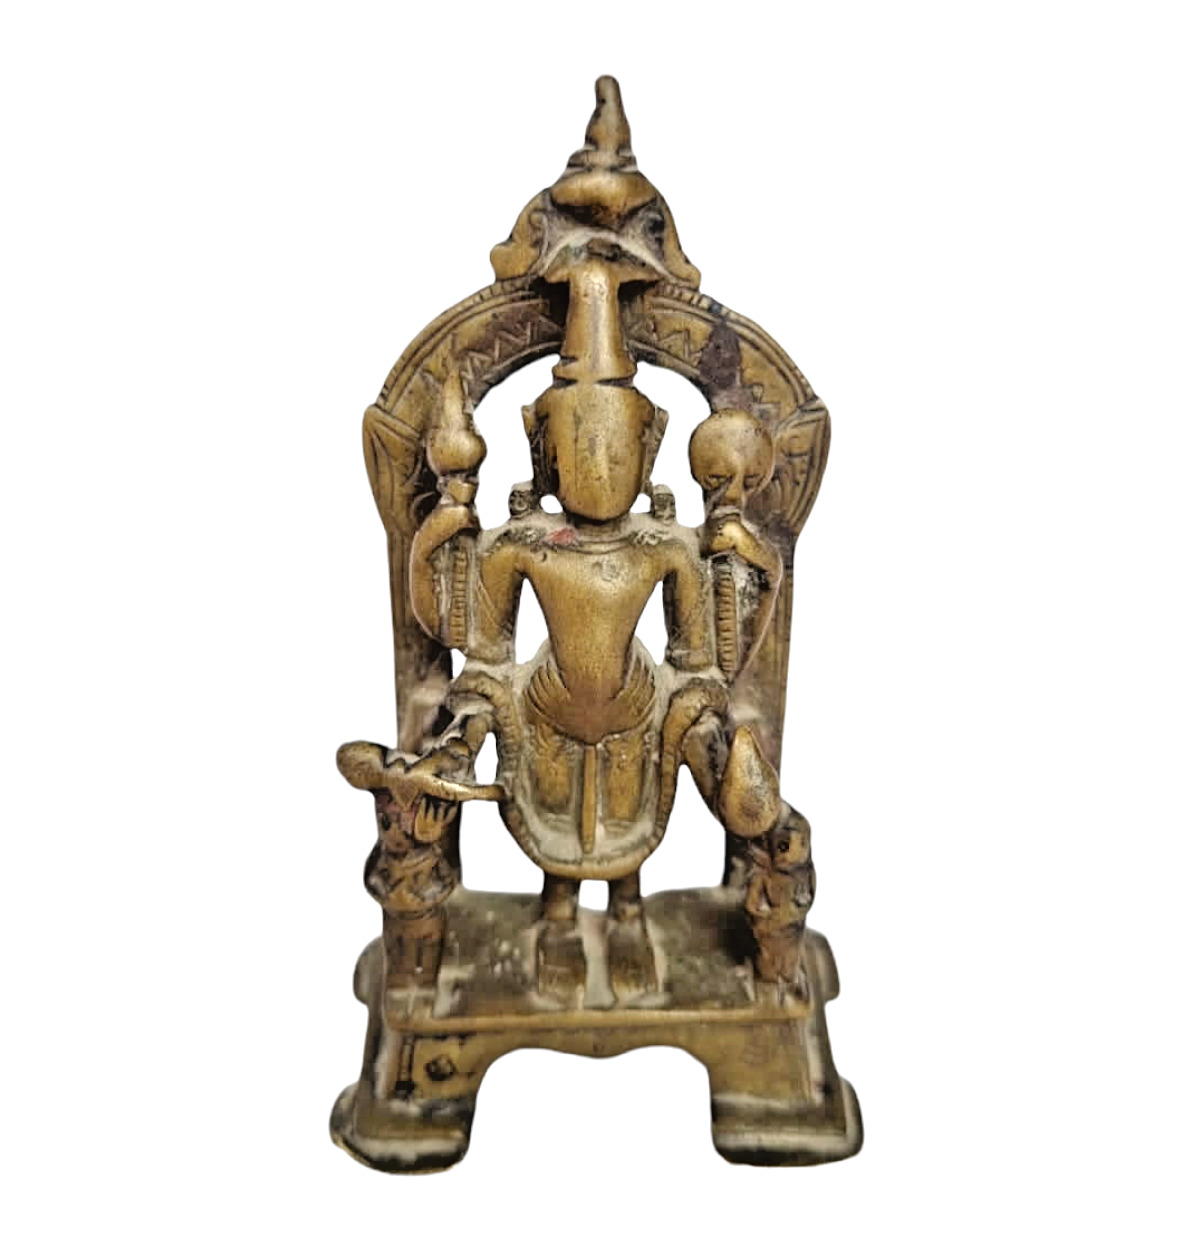 Rare 1600's Old Vintage Antique Brass Hindu God Lord Vishnu Temple Figure Statue